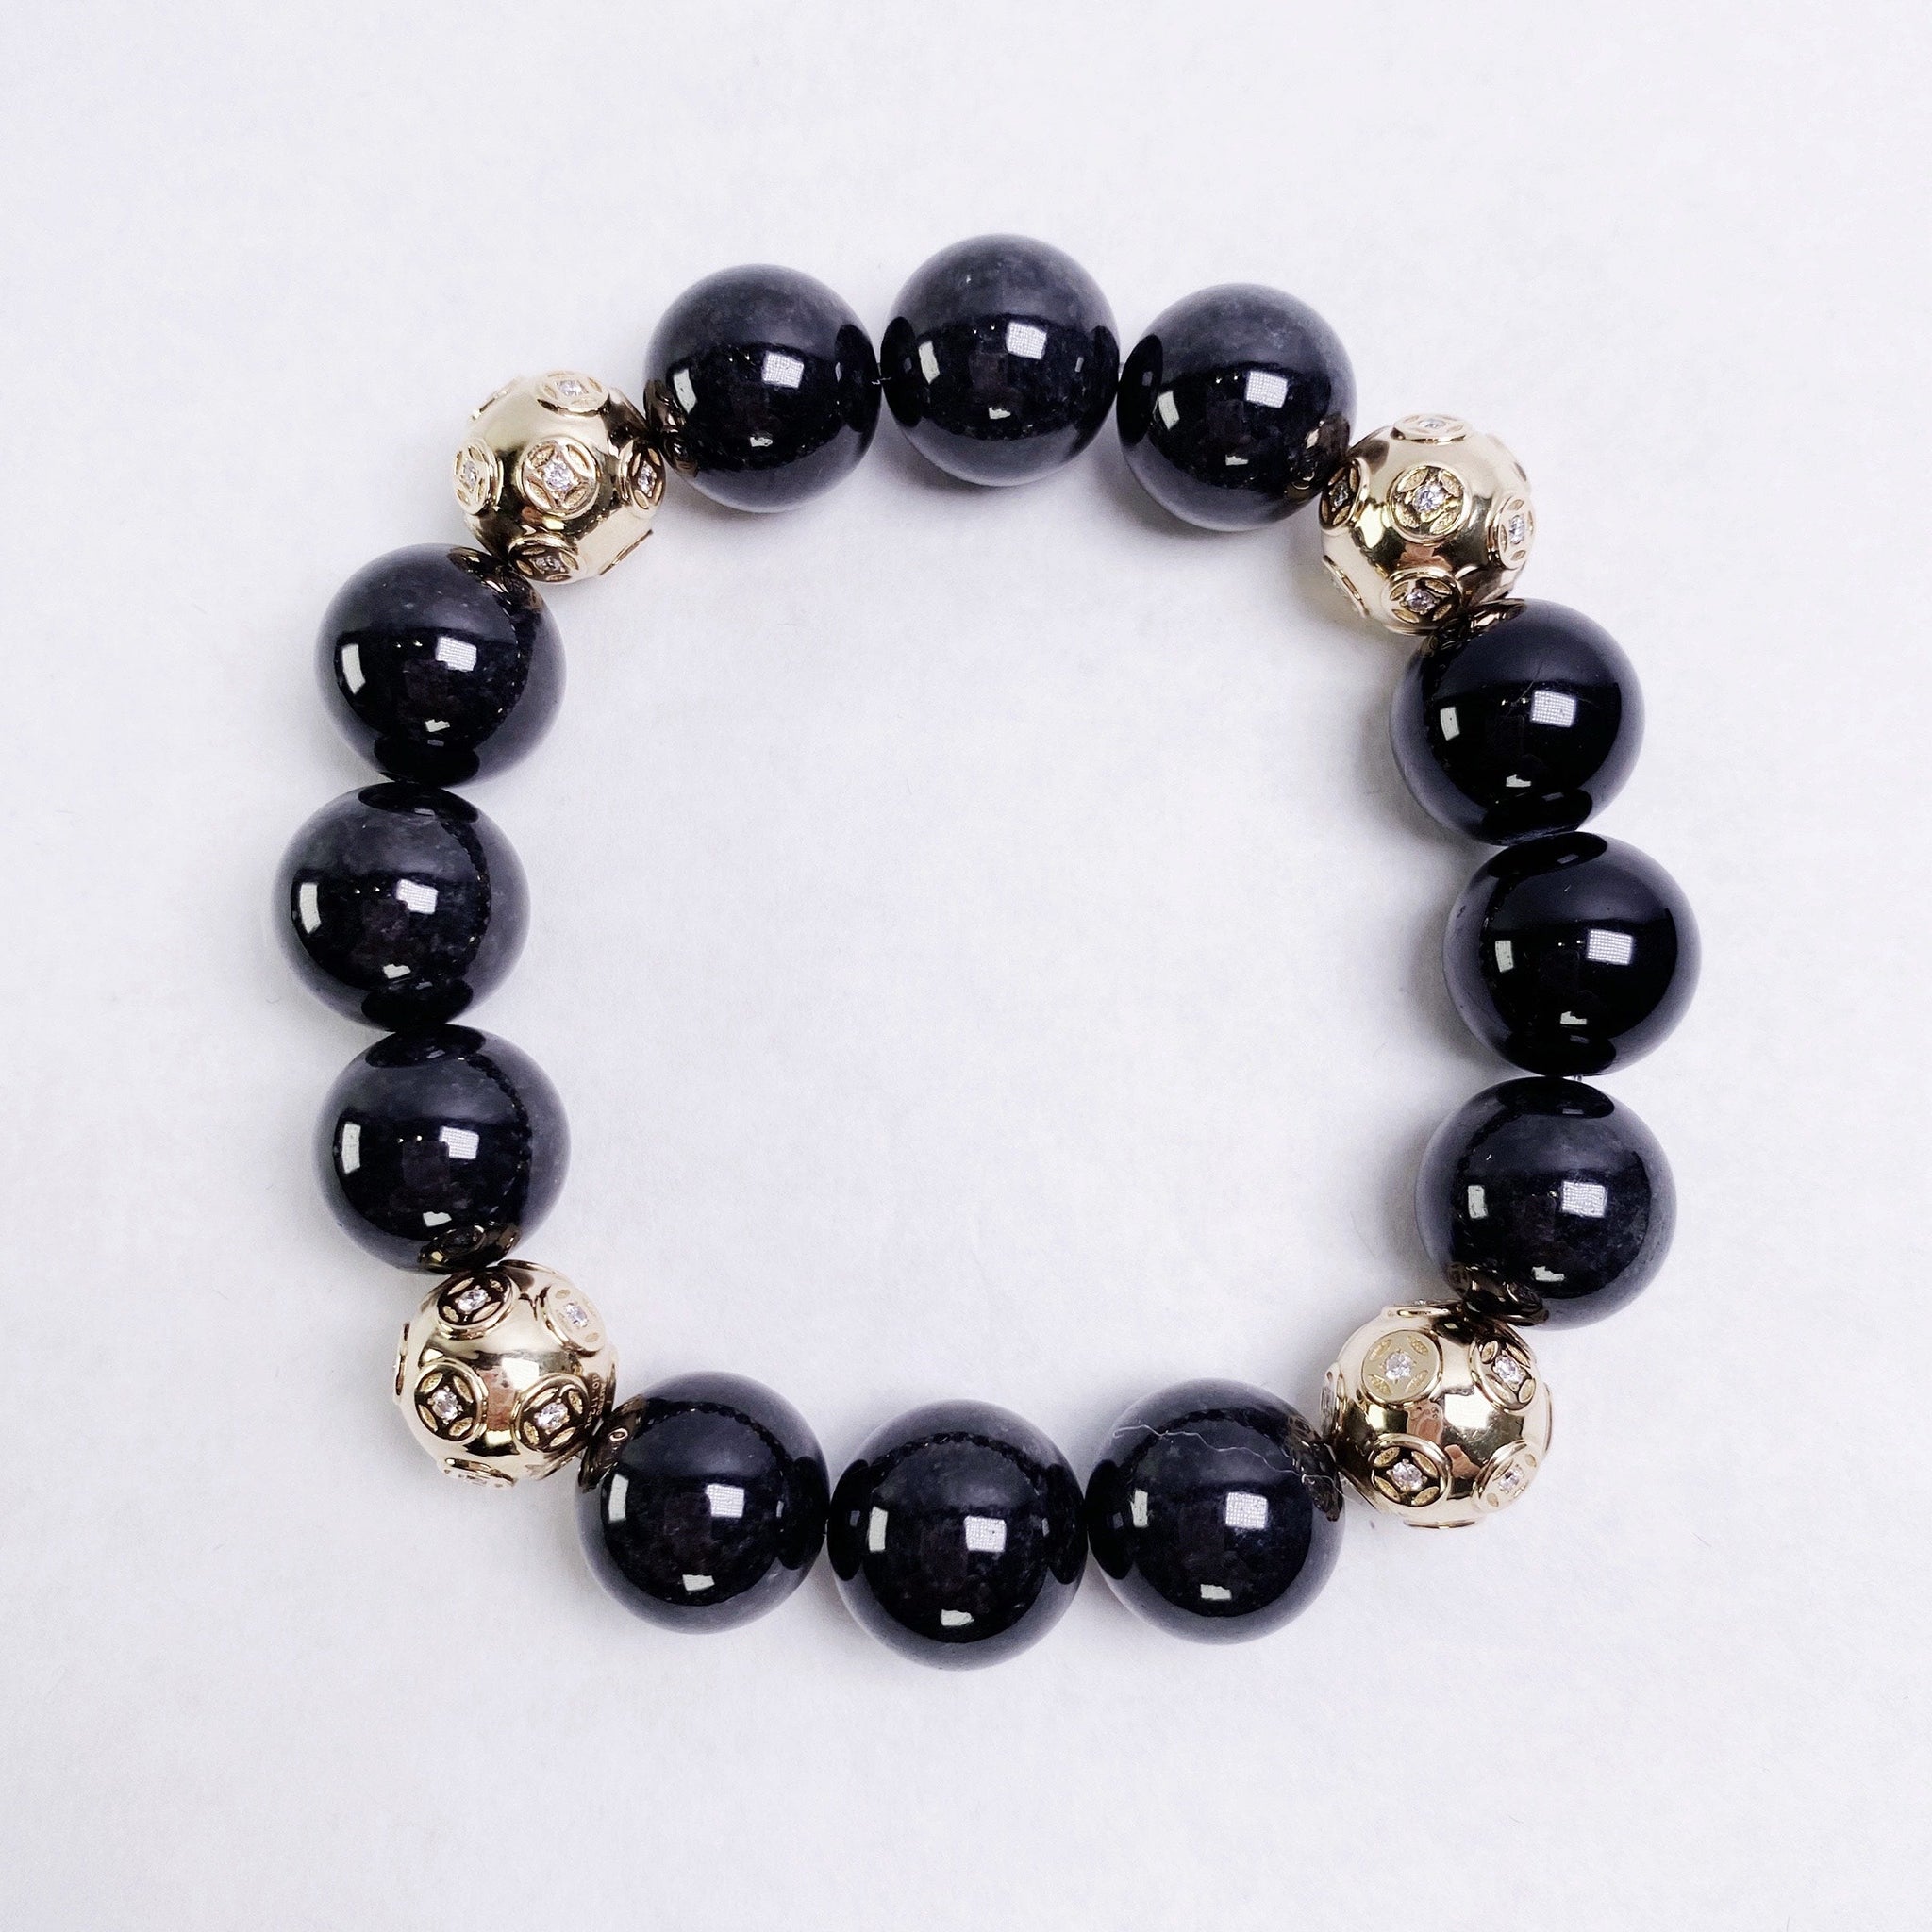 Black Jadeite Jade Bead Bracelet with 18K Yellow Gold Diamond Money Ball Beads (Large)